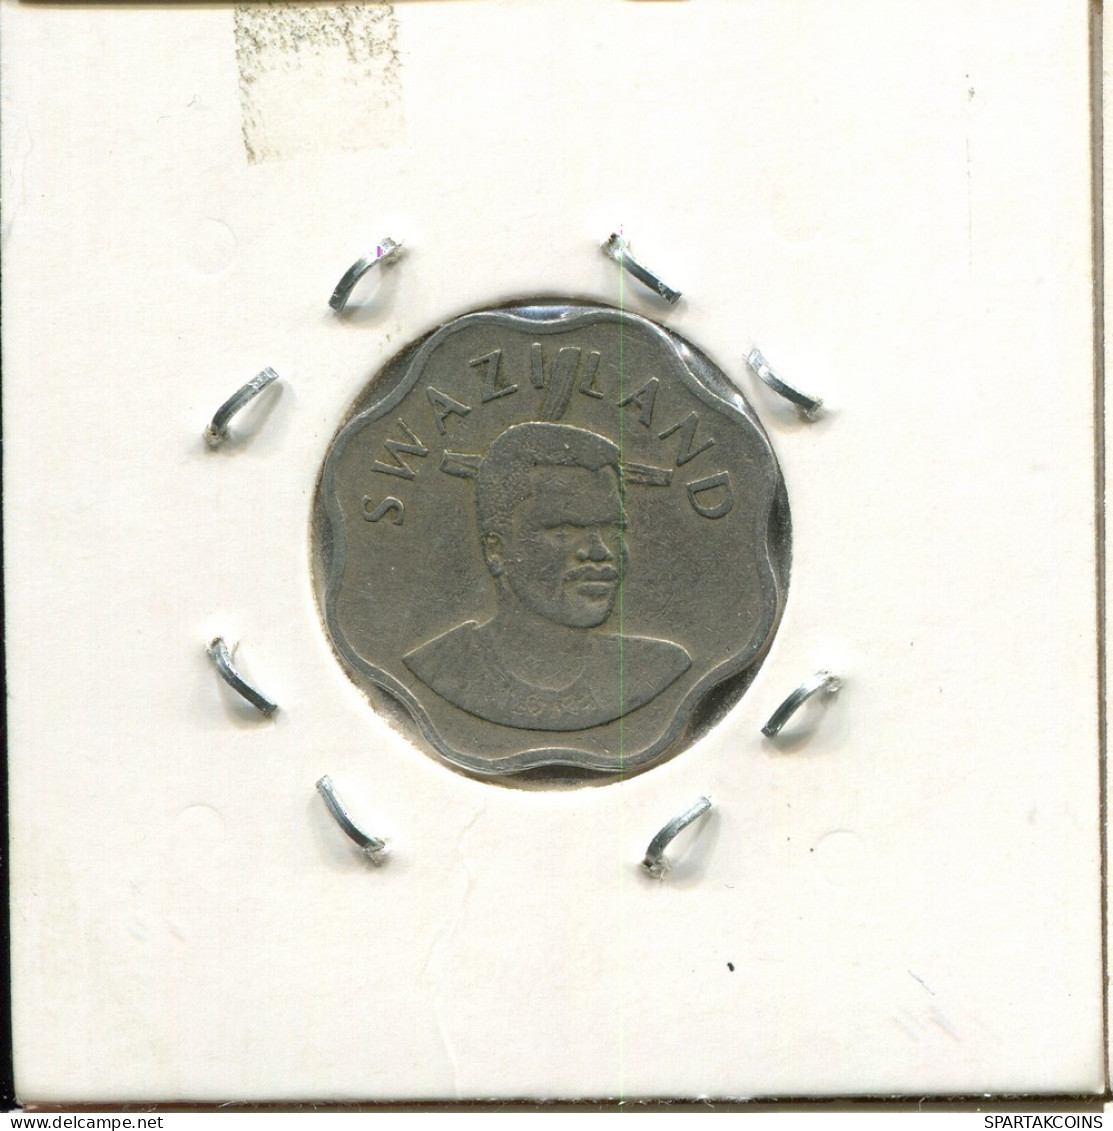 10 CENTS 1995 SWAZILANDIA SWAZILAND Moneda #AS316.E.A - Swazilandia